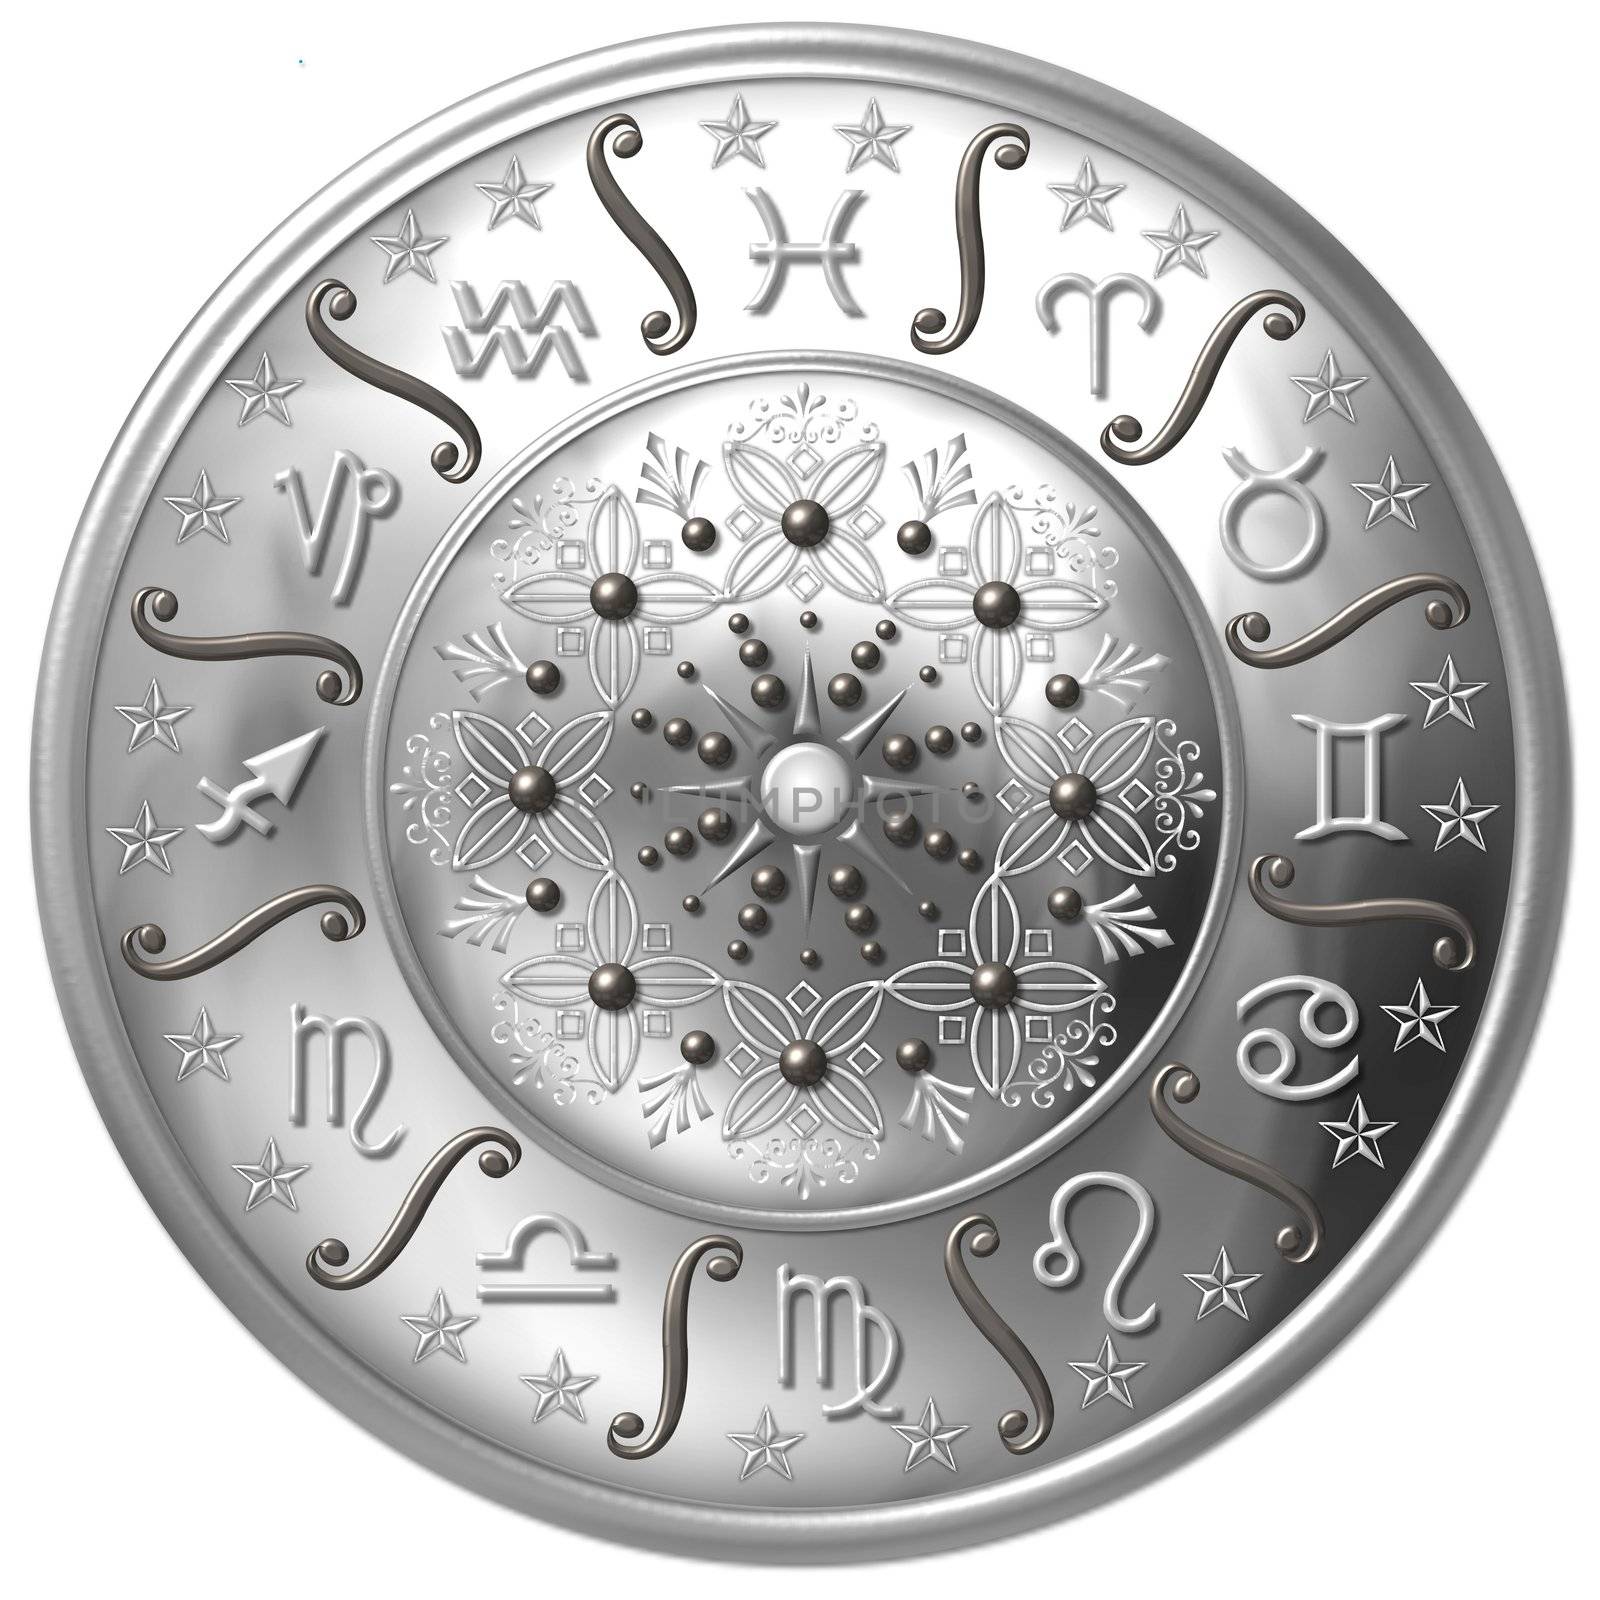 Zodiac Disc by peromarketing